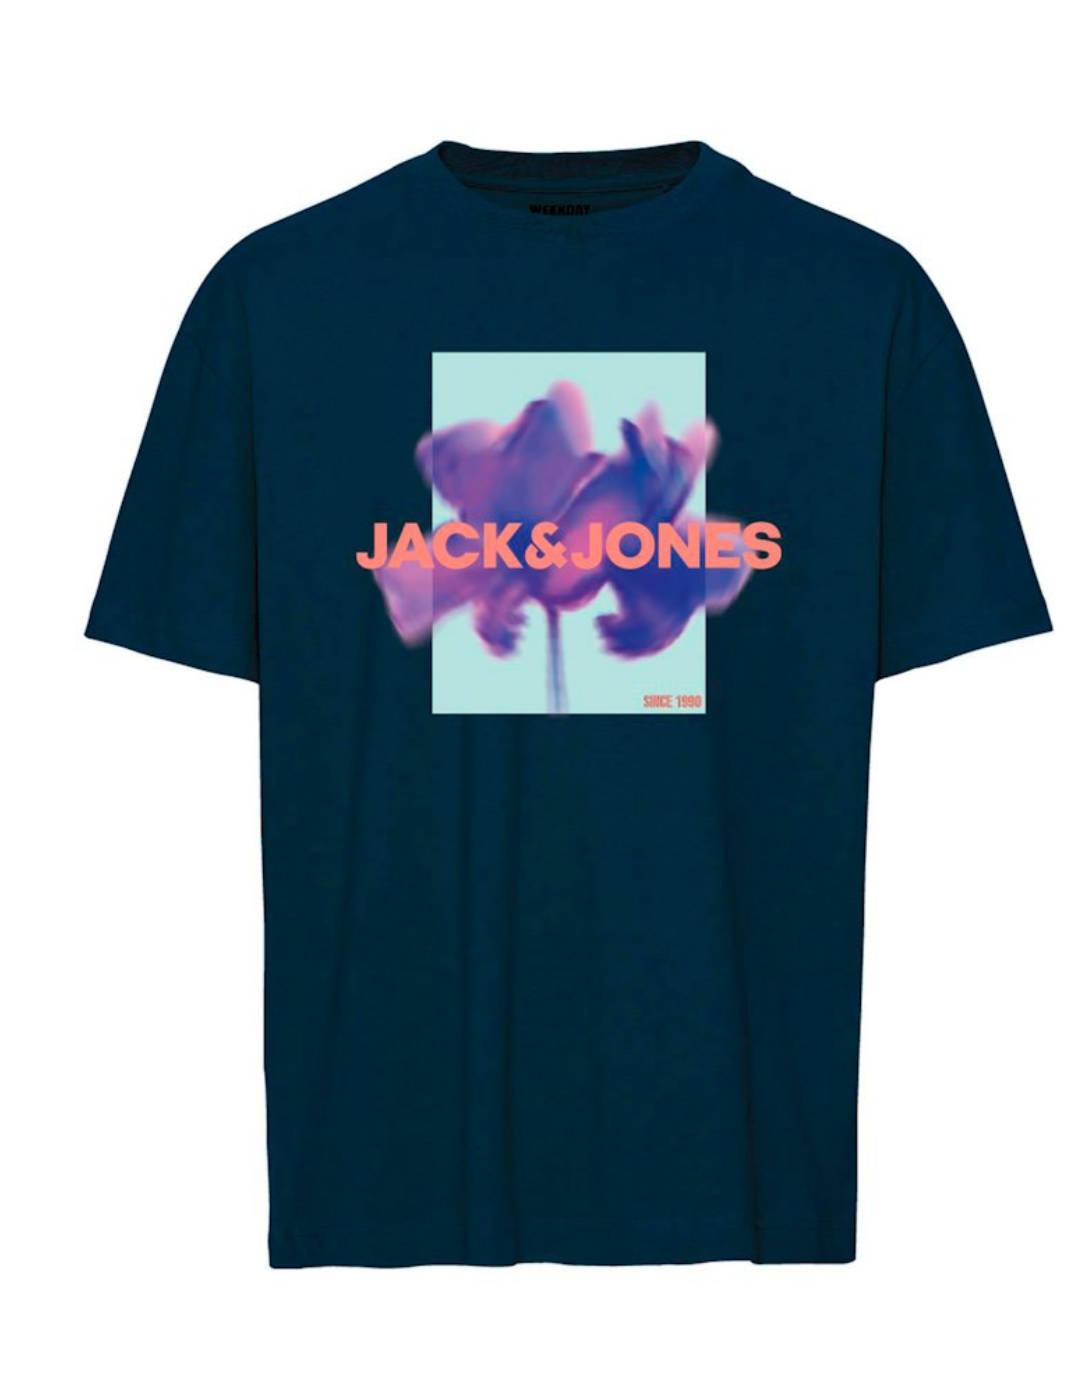 Camiseta Jack&Jones Florals marino manga corta para hombre